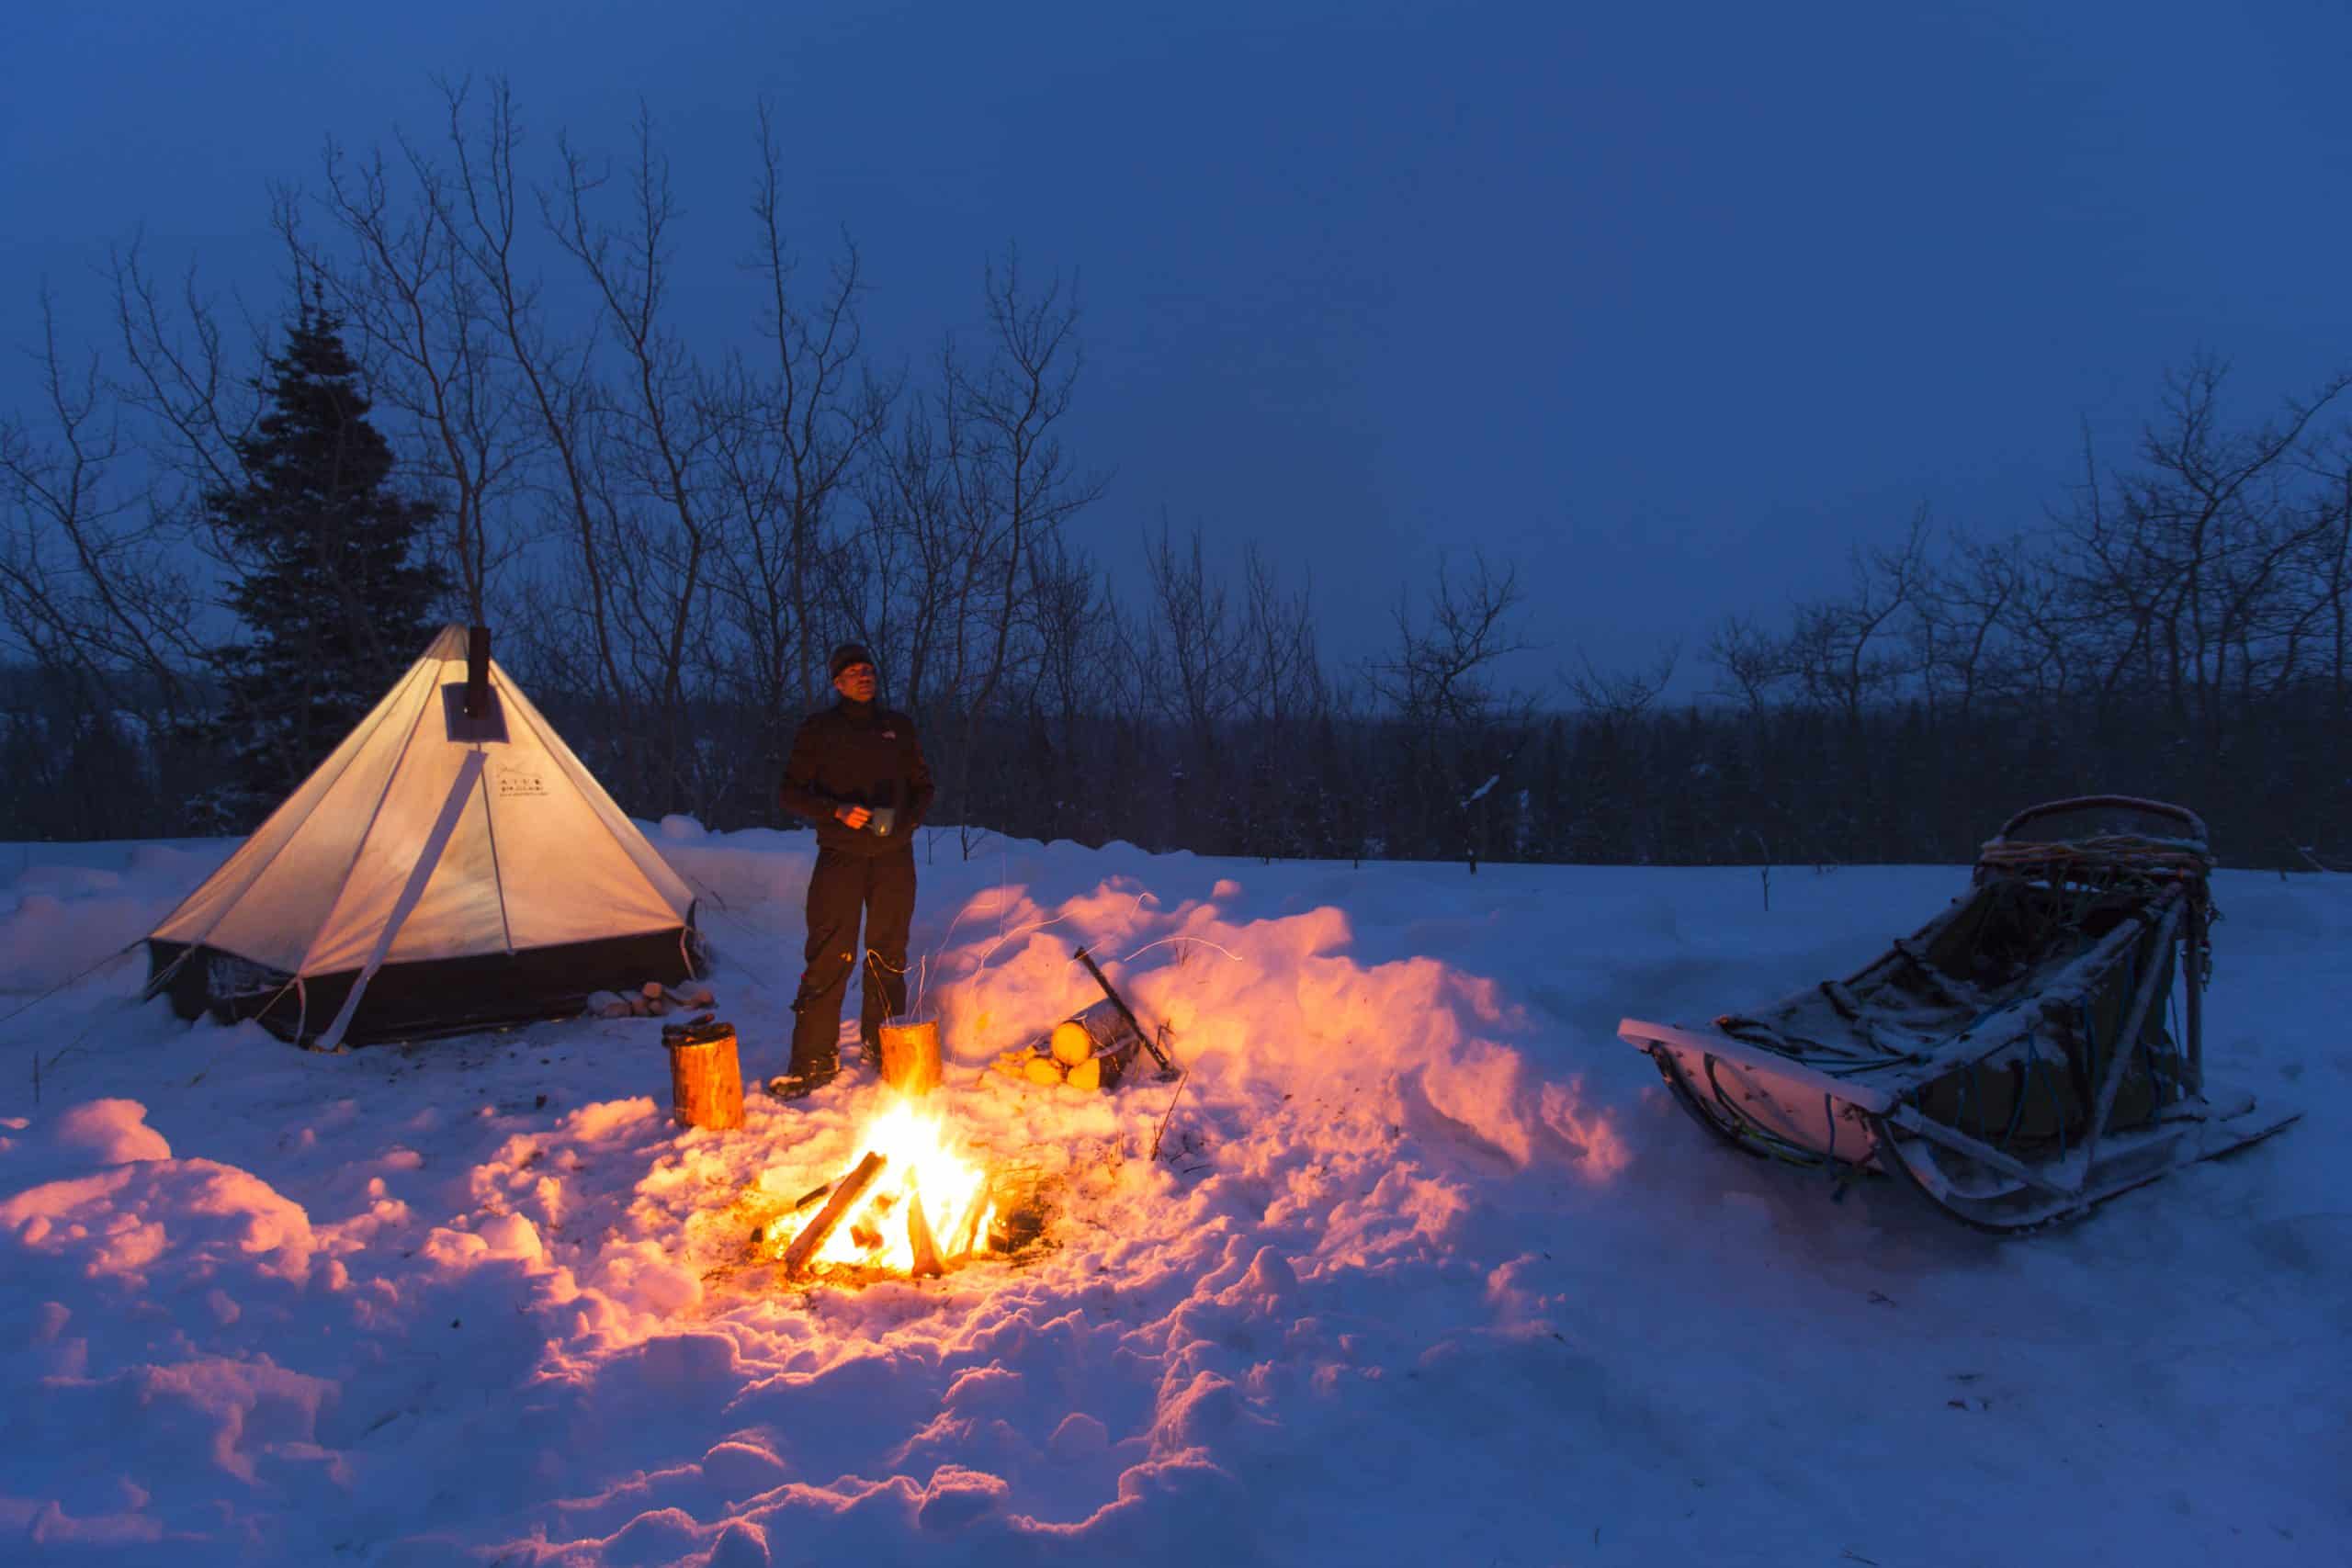 Dog Sledding - Cozy warm campfire